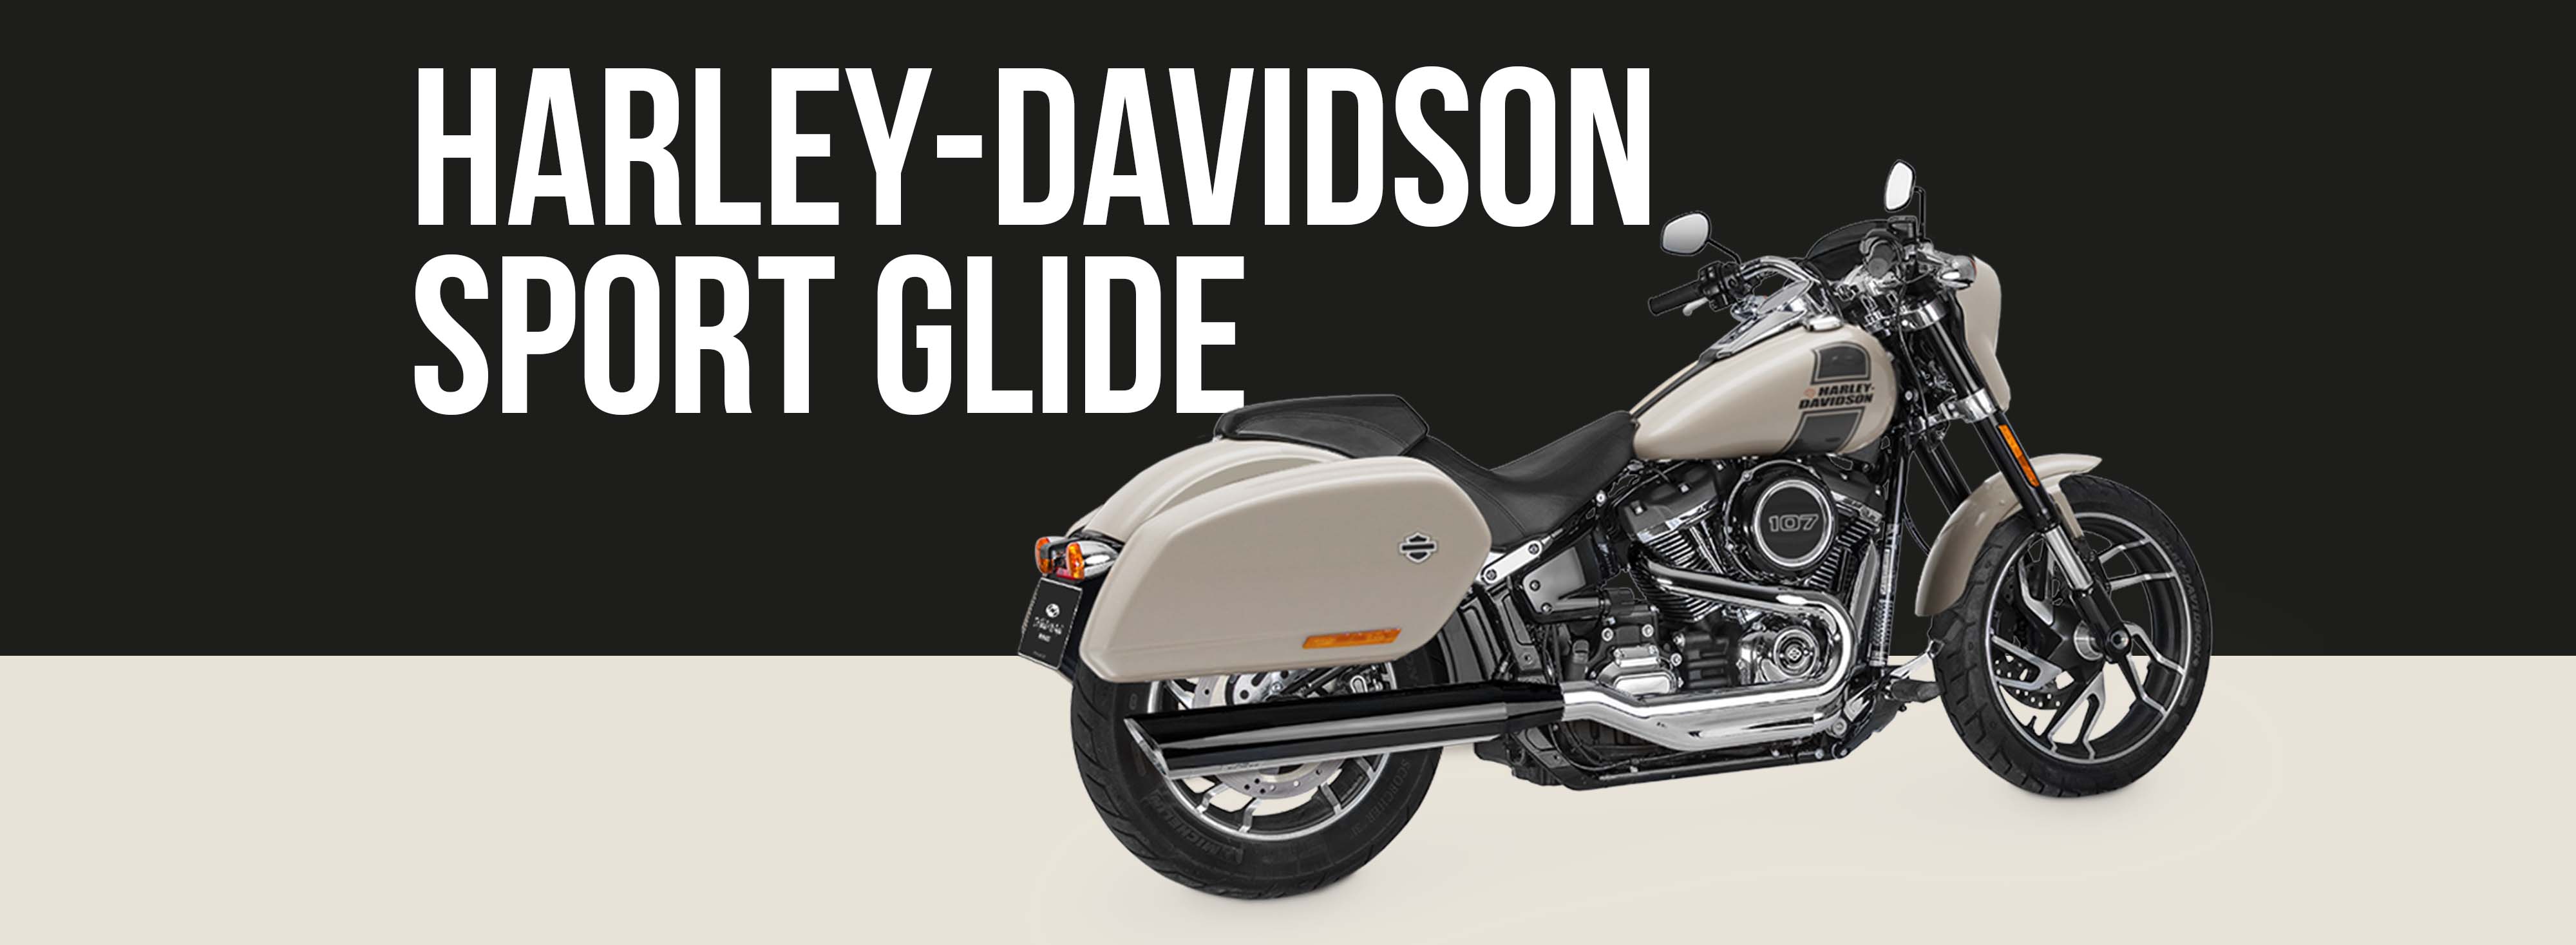 Harley-davidson Sport Glide Motorcycle Brand Page Header